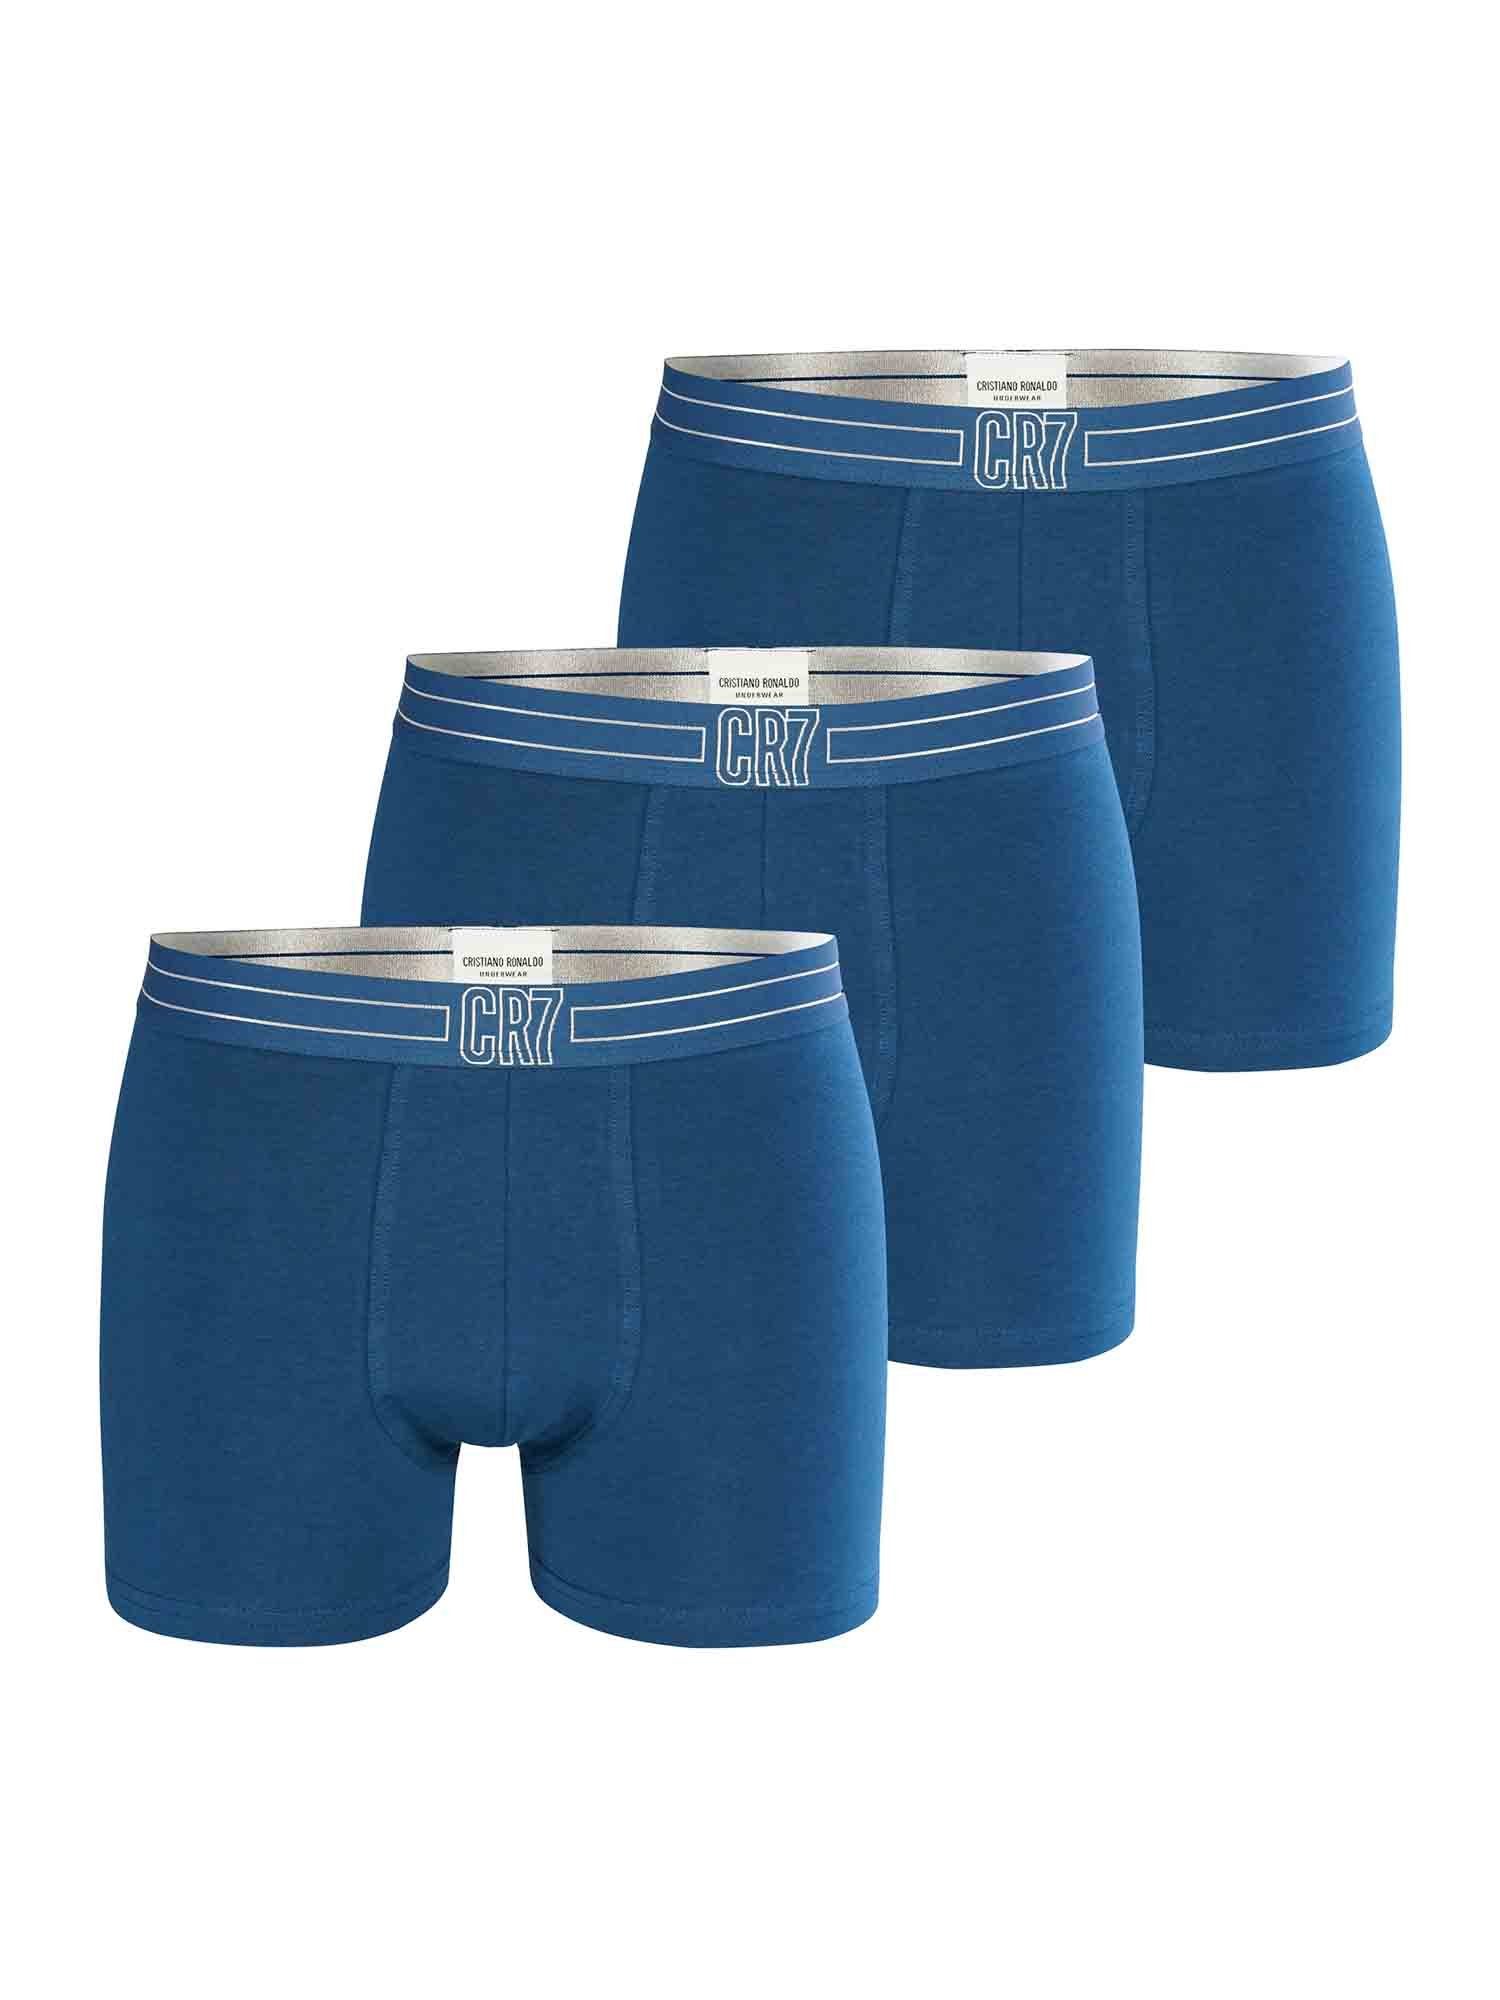 CR7 Retro Pants Herren Männer Boxershorts Retro Pants Trunks Multipack (3-St) Multi 8